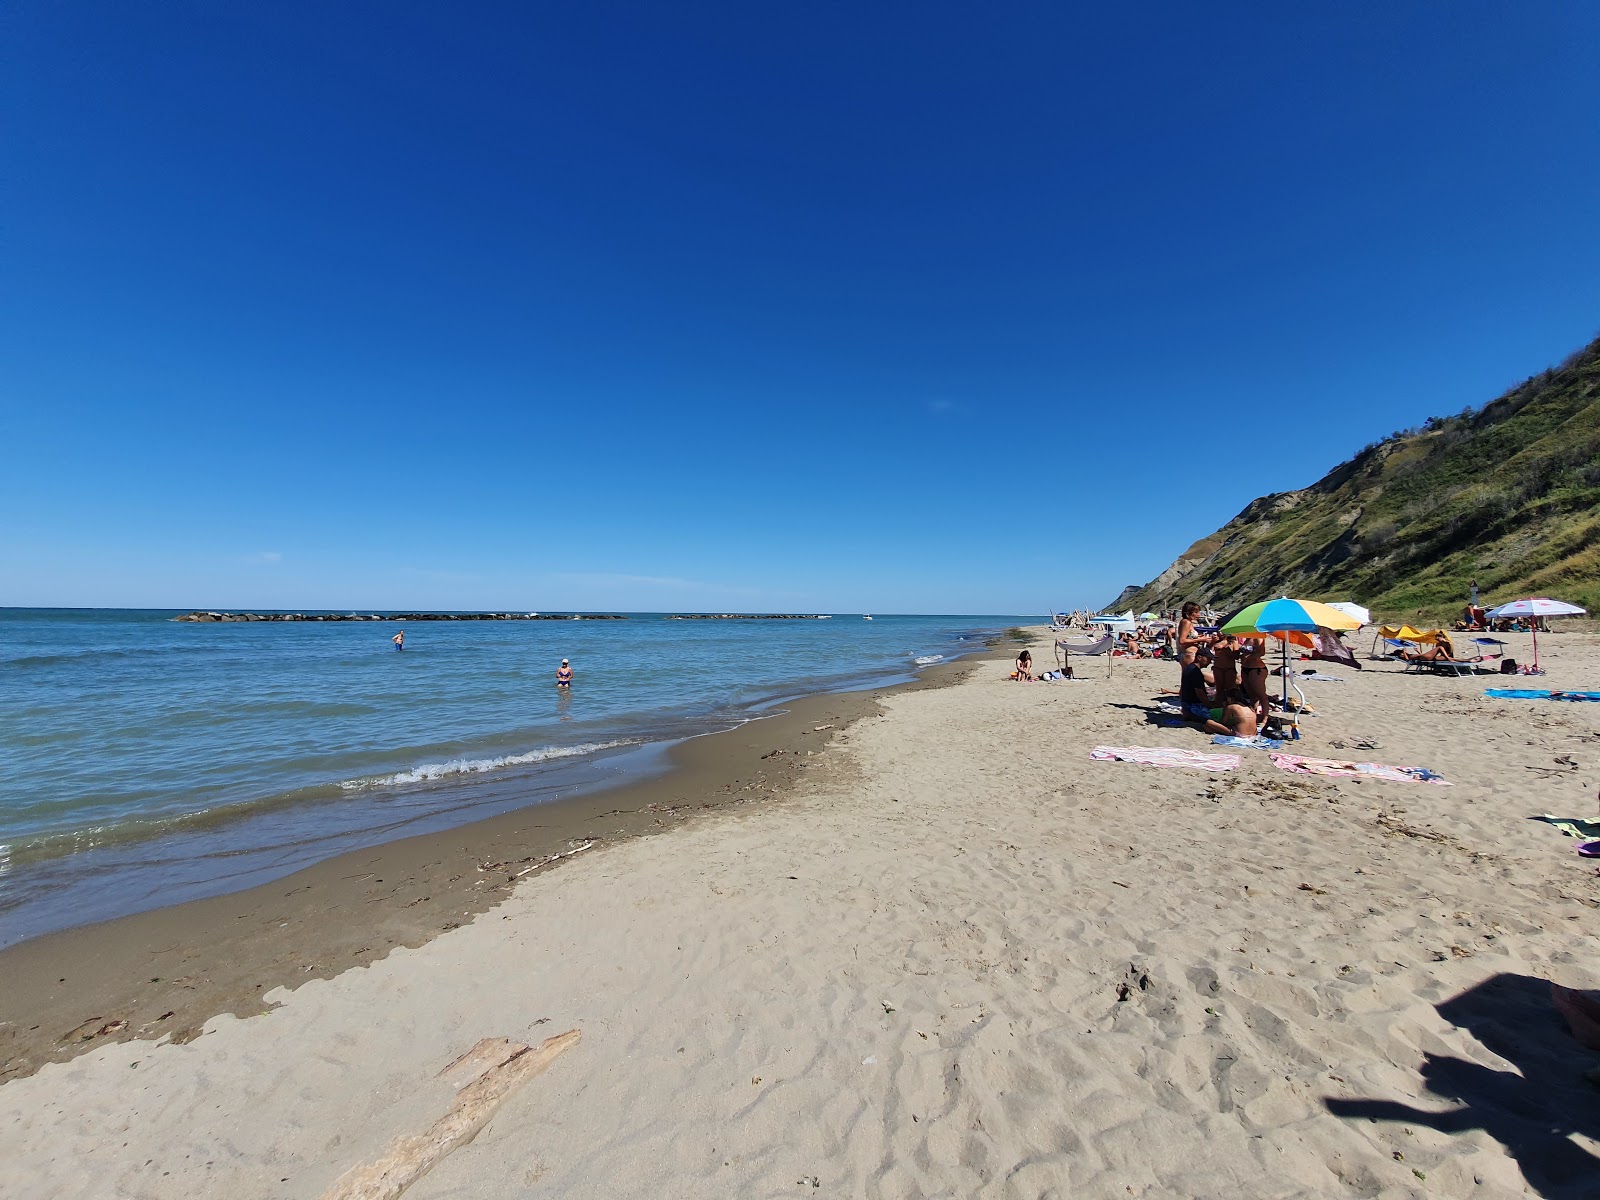 Spiaggia di Fiorenzuola di Focara'in fotoğrafı turkuaz su yüzey ile